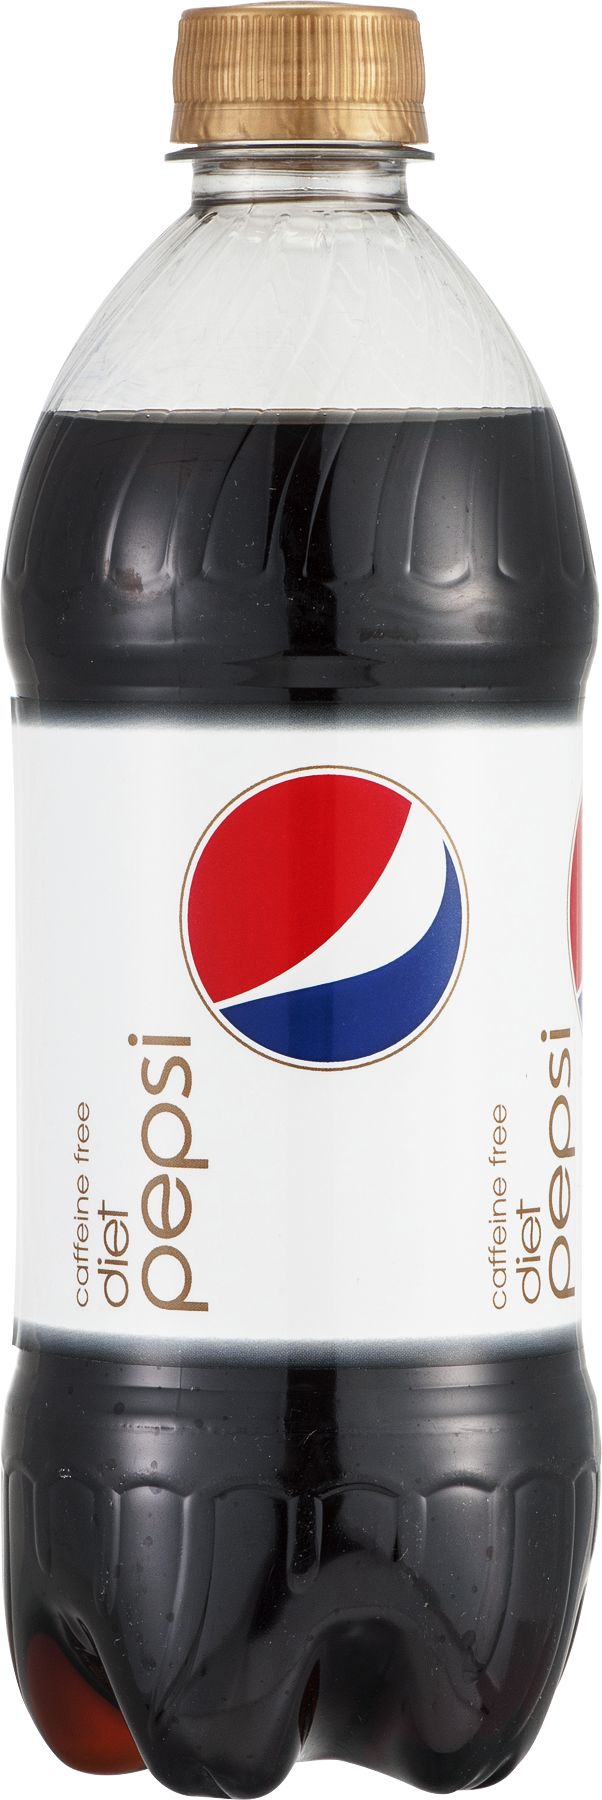 Caffeine Free Pepsi Bottle